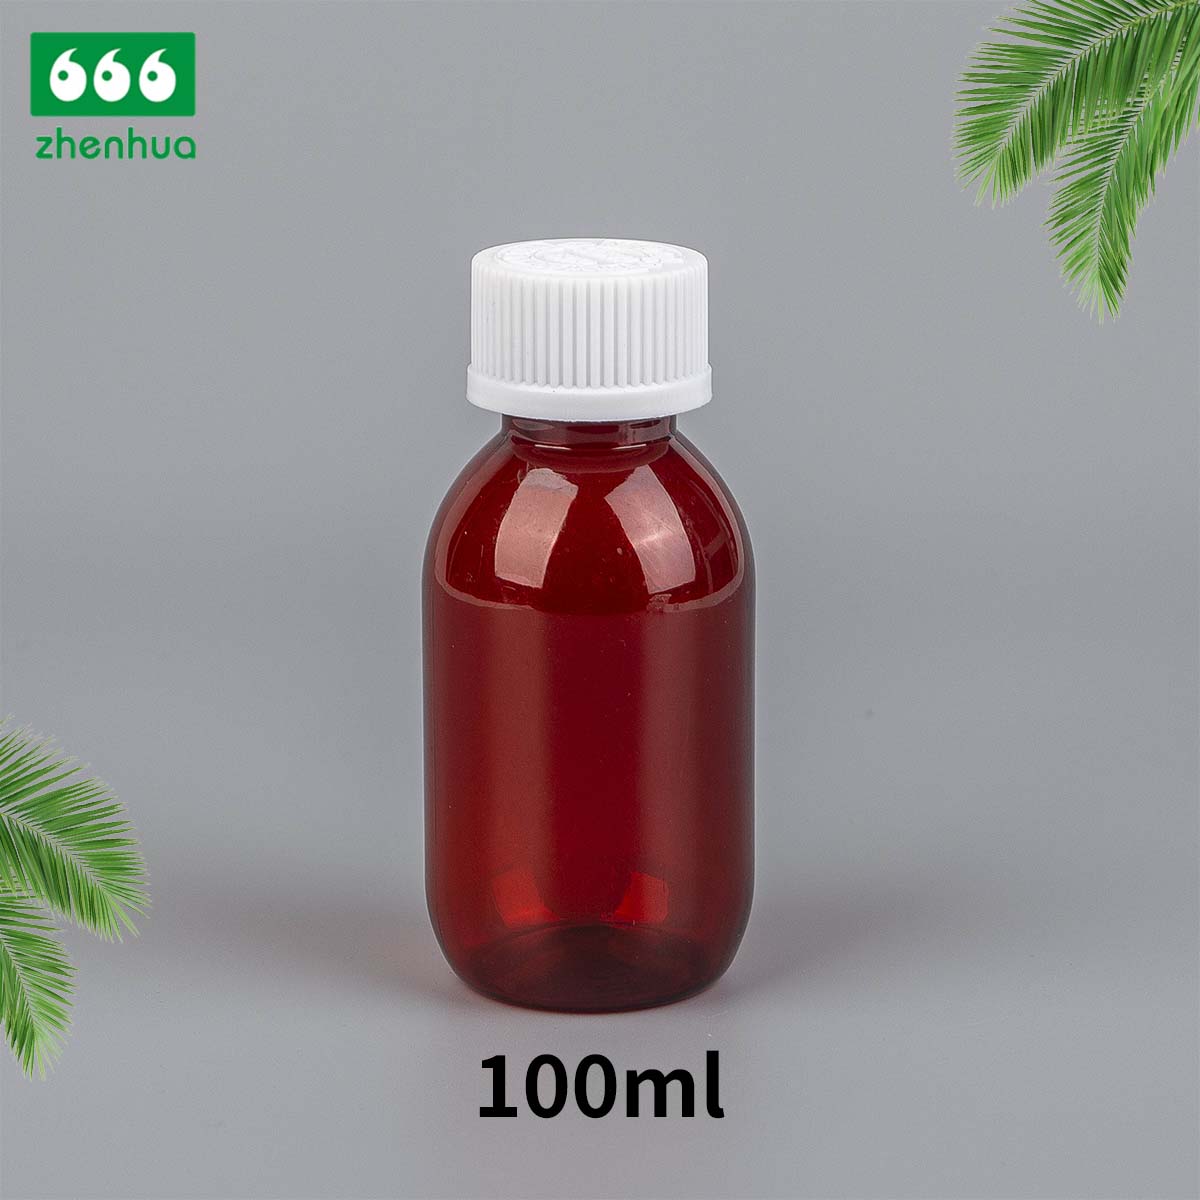 100ml Round Amber PET Liquid Medicinal Syrup Bottle/ Enzyme Drink Bottle with Tamper Evident Cap